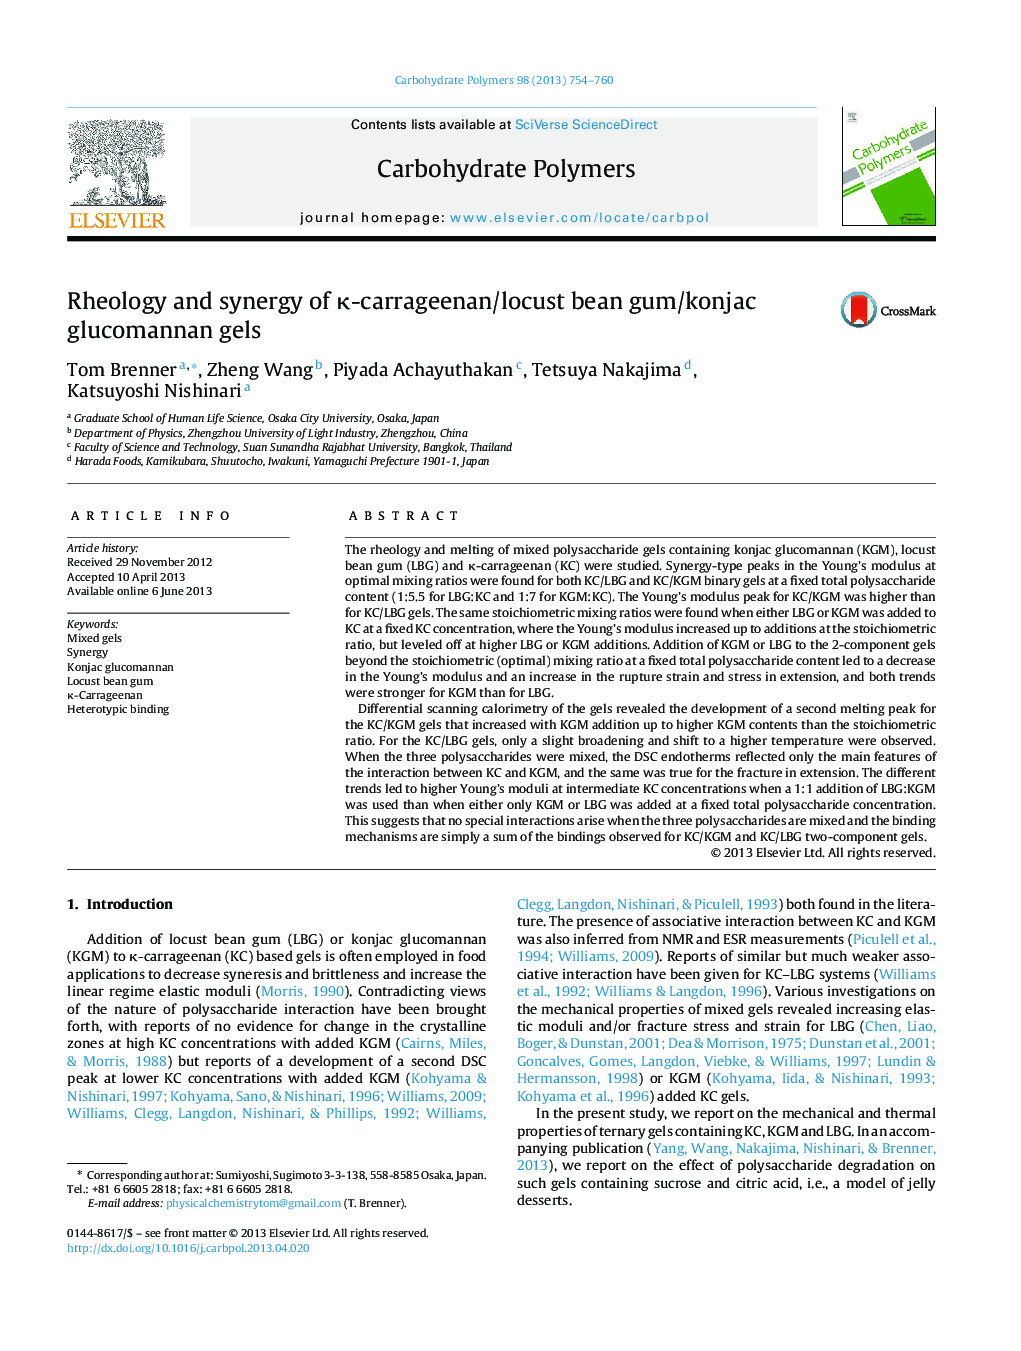 Rheology and synergy of Îº-carrageenan/locust bean gum/konjac glucomannan gels